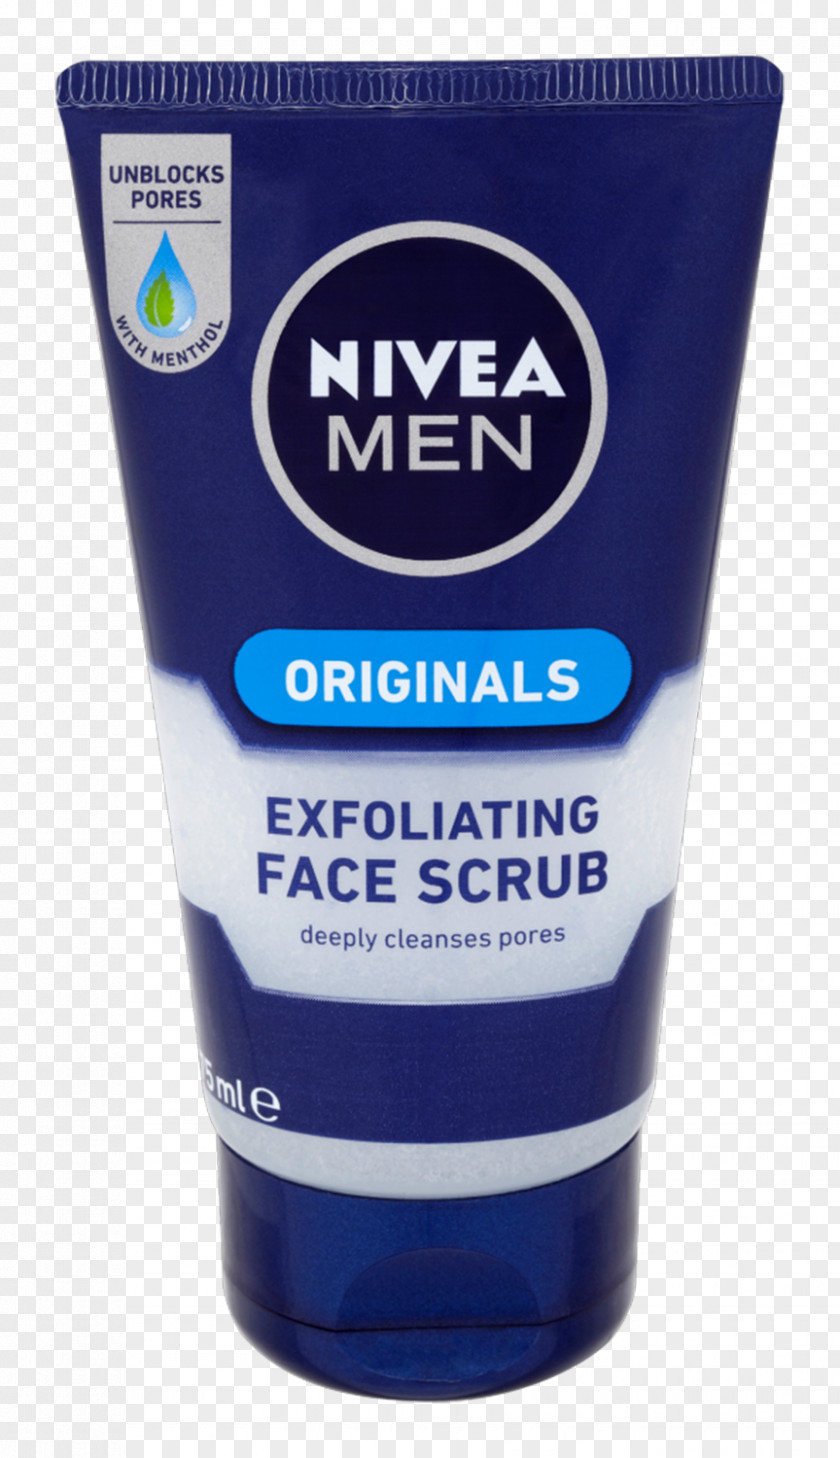 Face Scrub Lotion Cleanser Nivea Exfoliation Amazon.com PNG